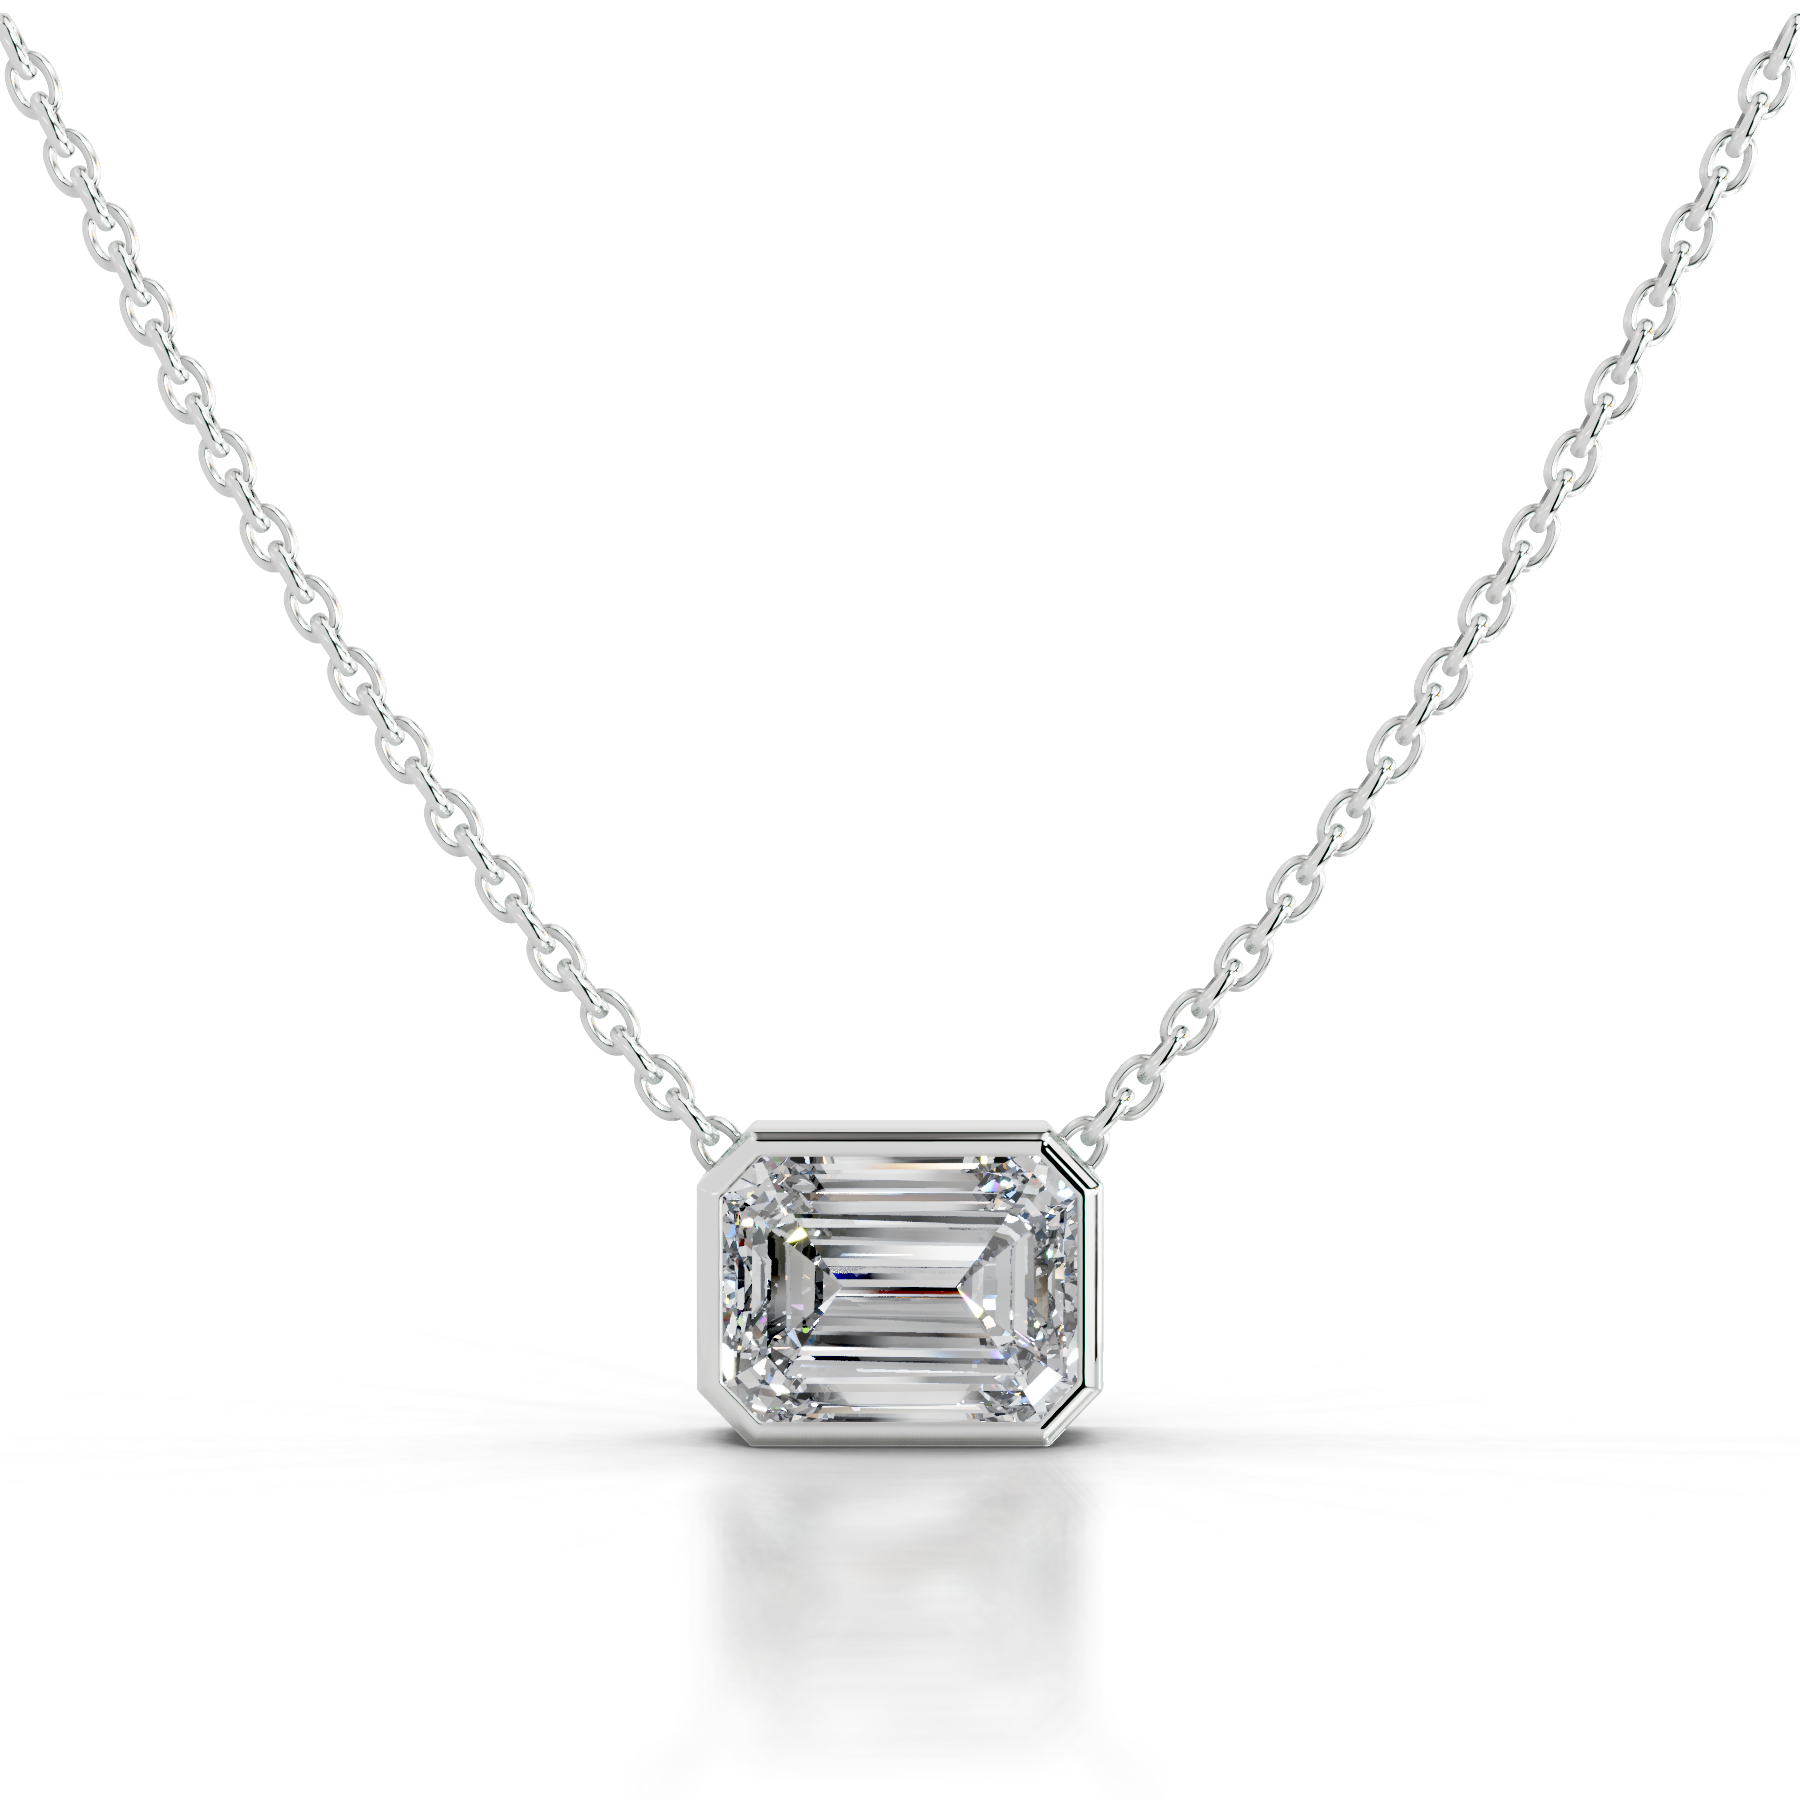 Etta Diamond Pendant  (2 Carat) -14K White Gold